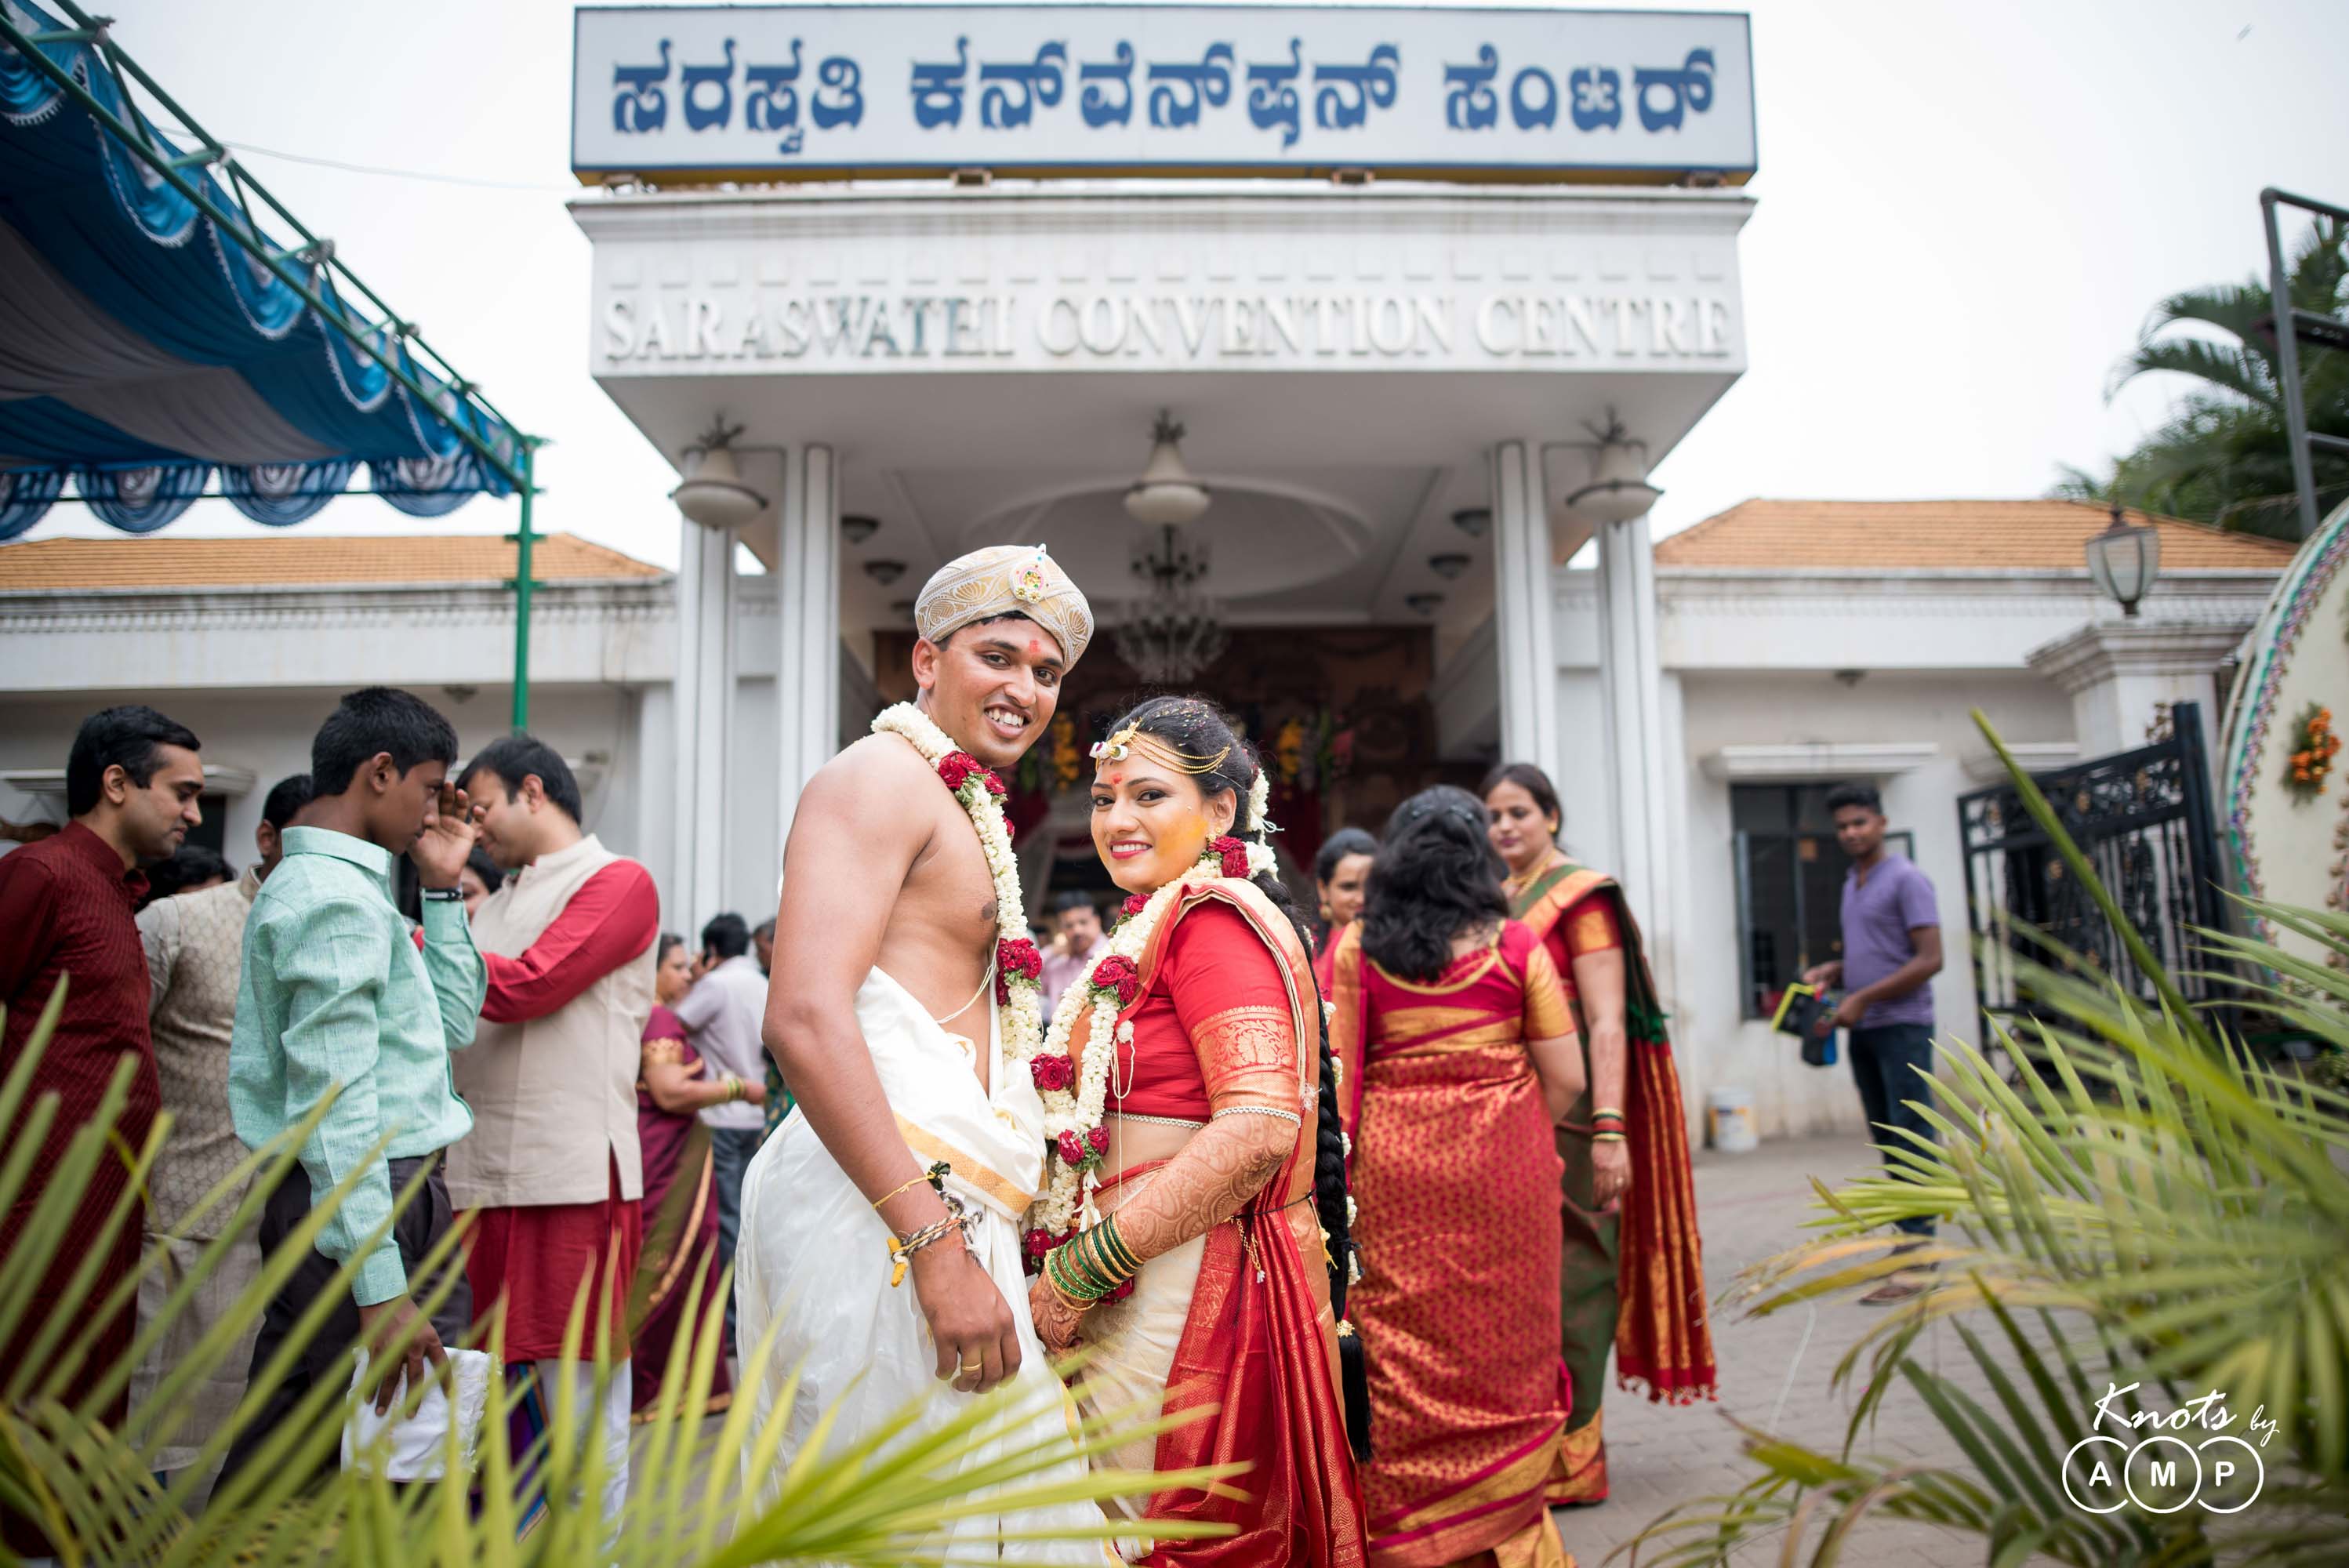 Kannadiga-Wedding-at-Saraswati-Convention-Centre-Bangalore-66